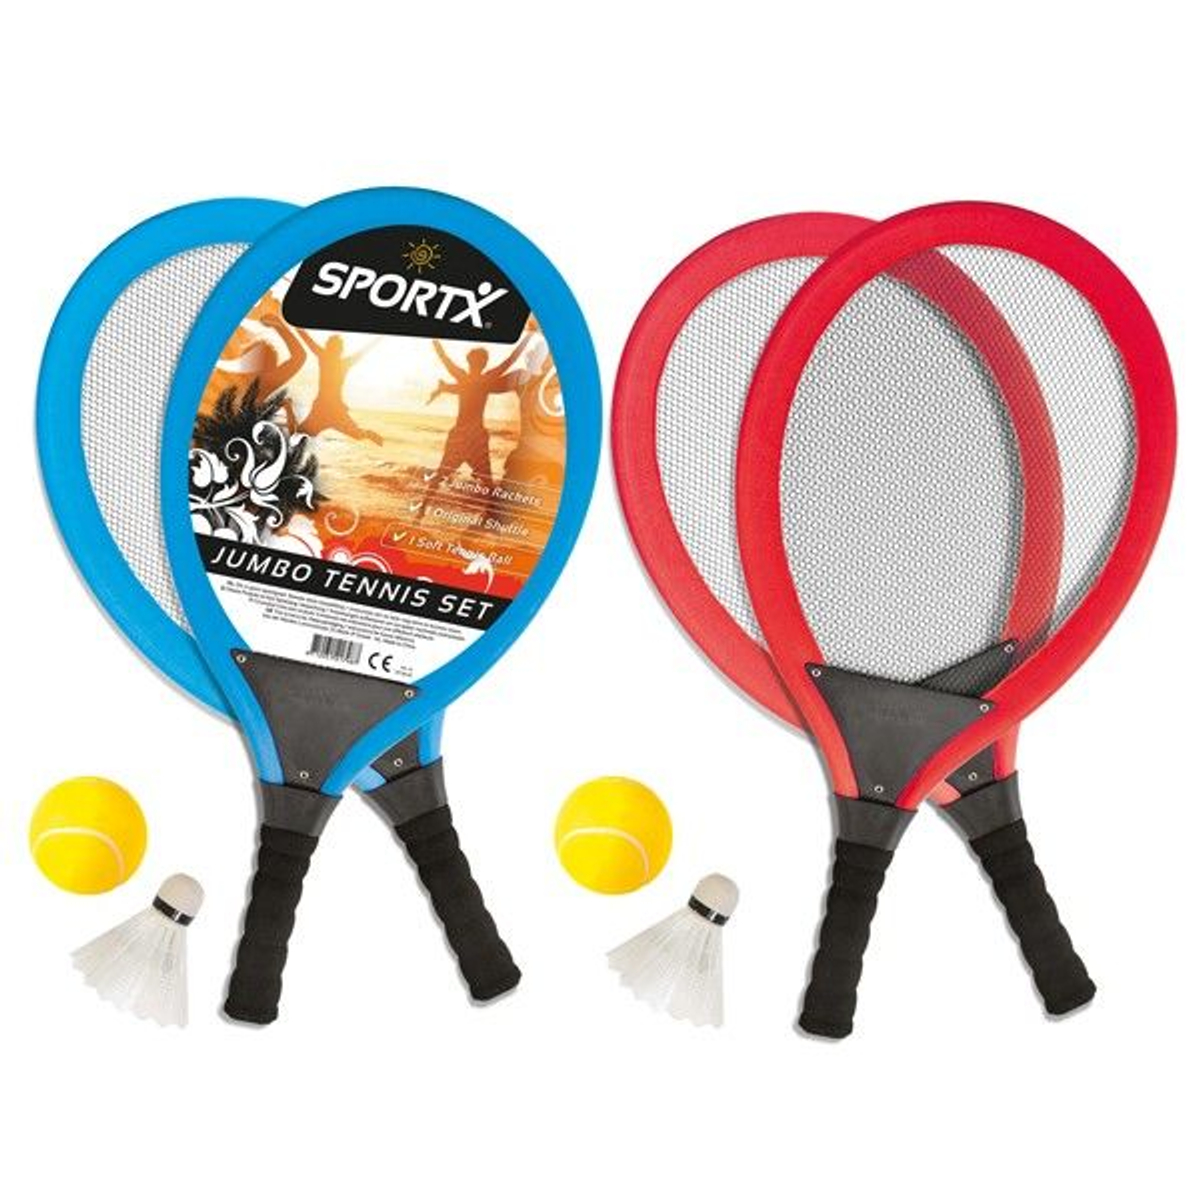 Sportx Jumbo Tennis Set